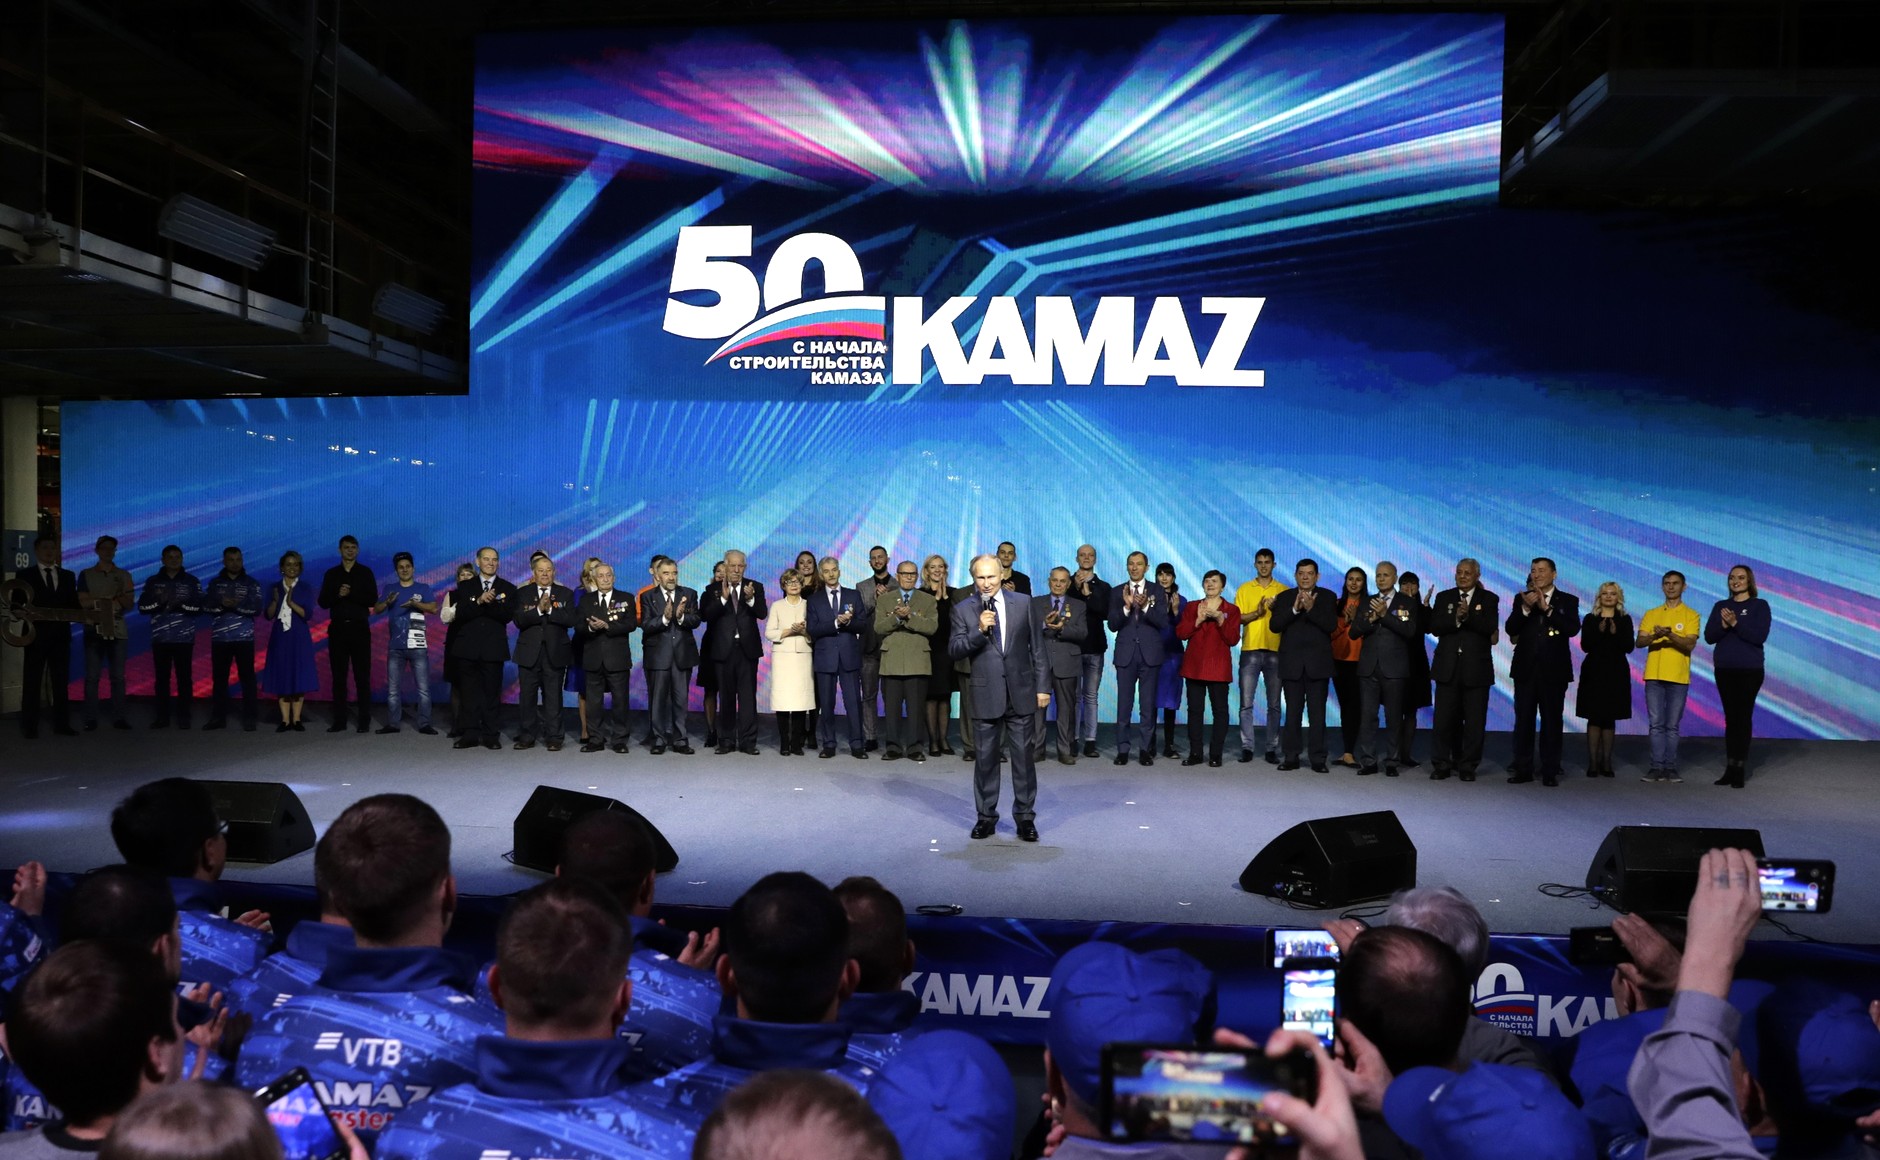 Vladimir Putin Congratulated KAMAZ on Its 50th Anniversary